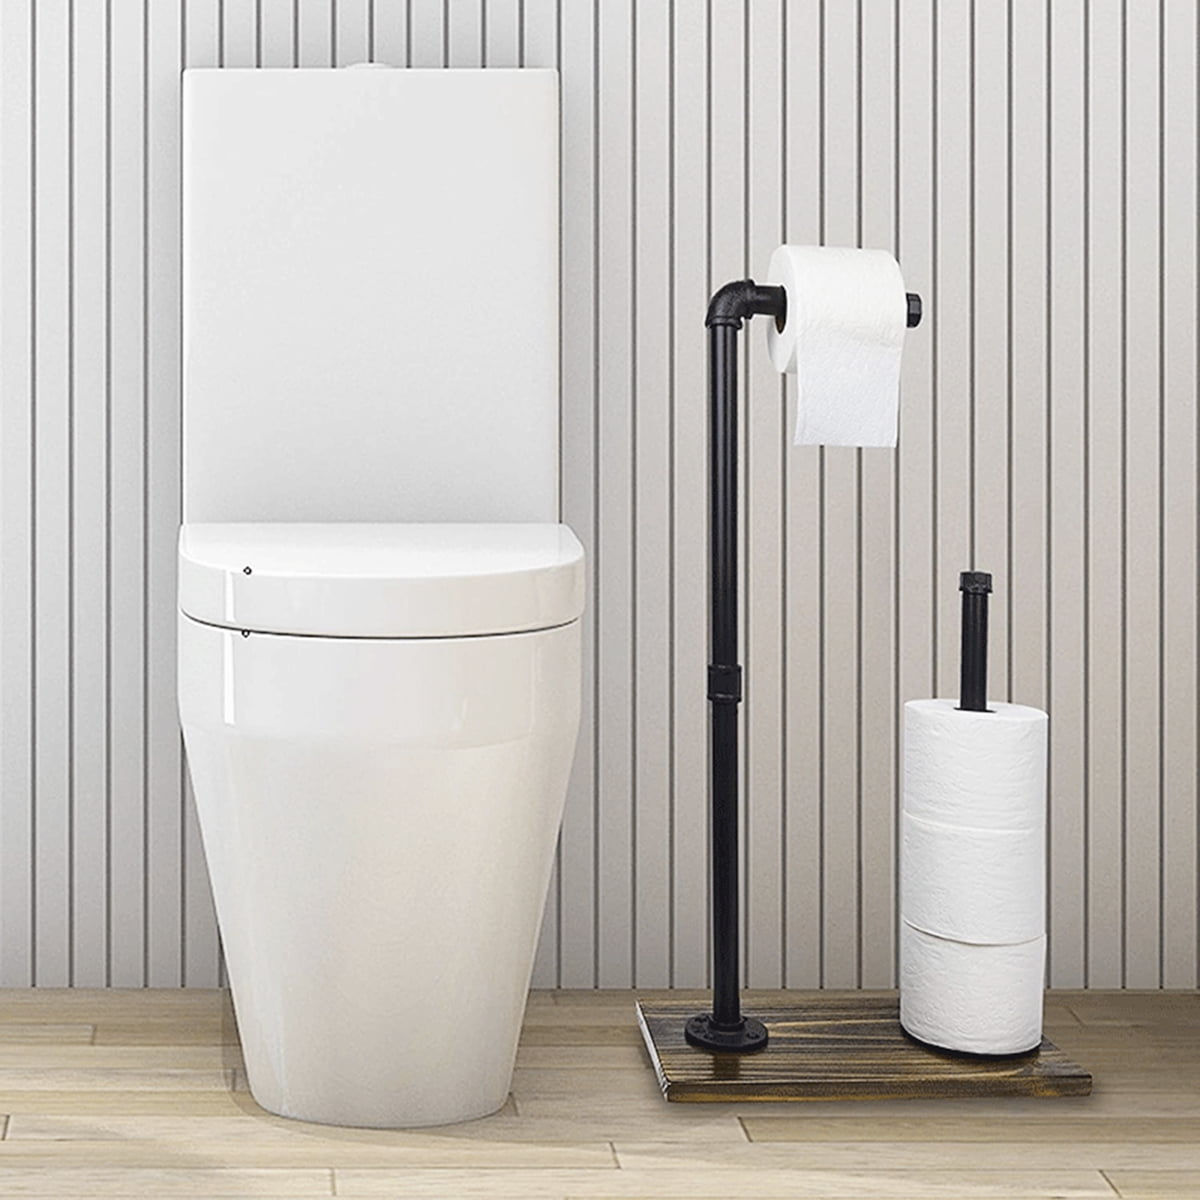 Bathroom Toilet Paper Holder Stand Industrial Tissue Organizer Free Standing 